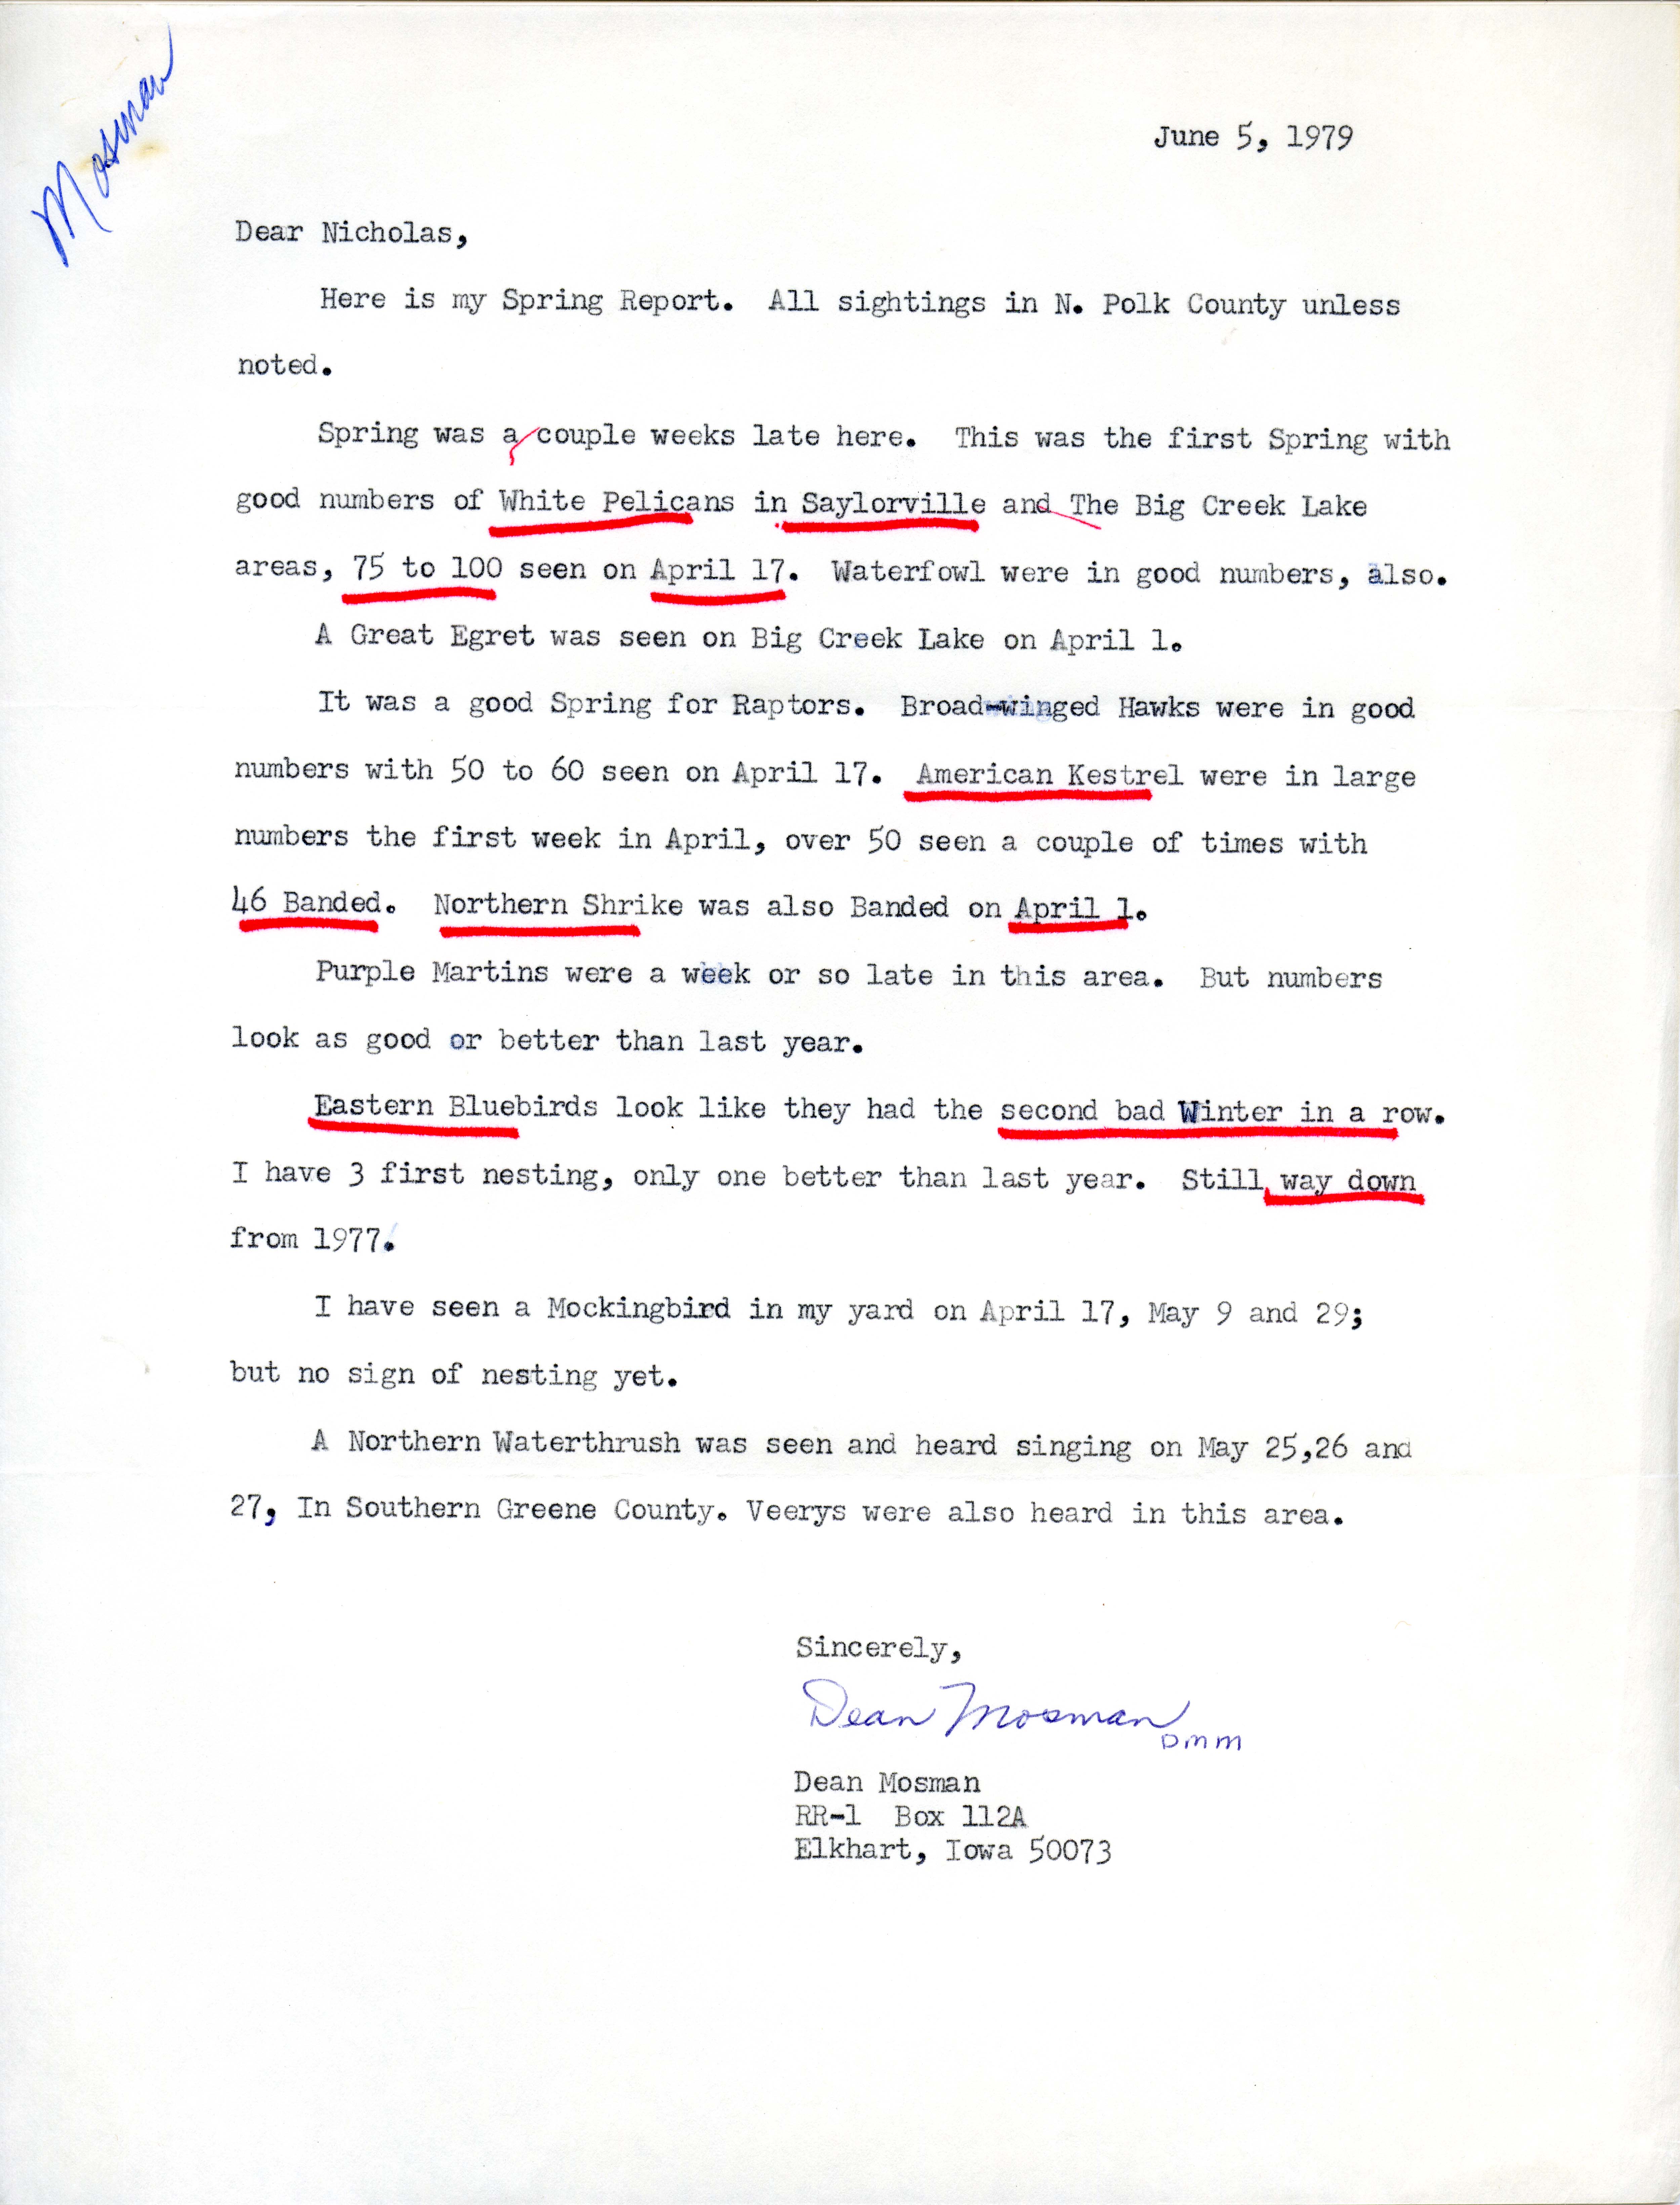 Dean Mosman letter to Nicholas S. Halmi regarding spring bird sightings, June 5, 1979